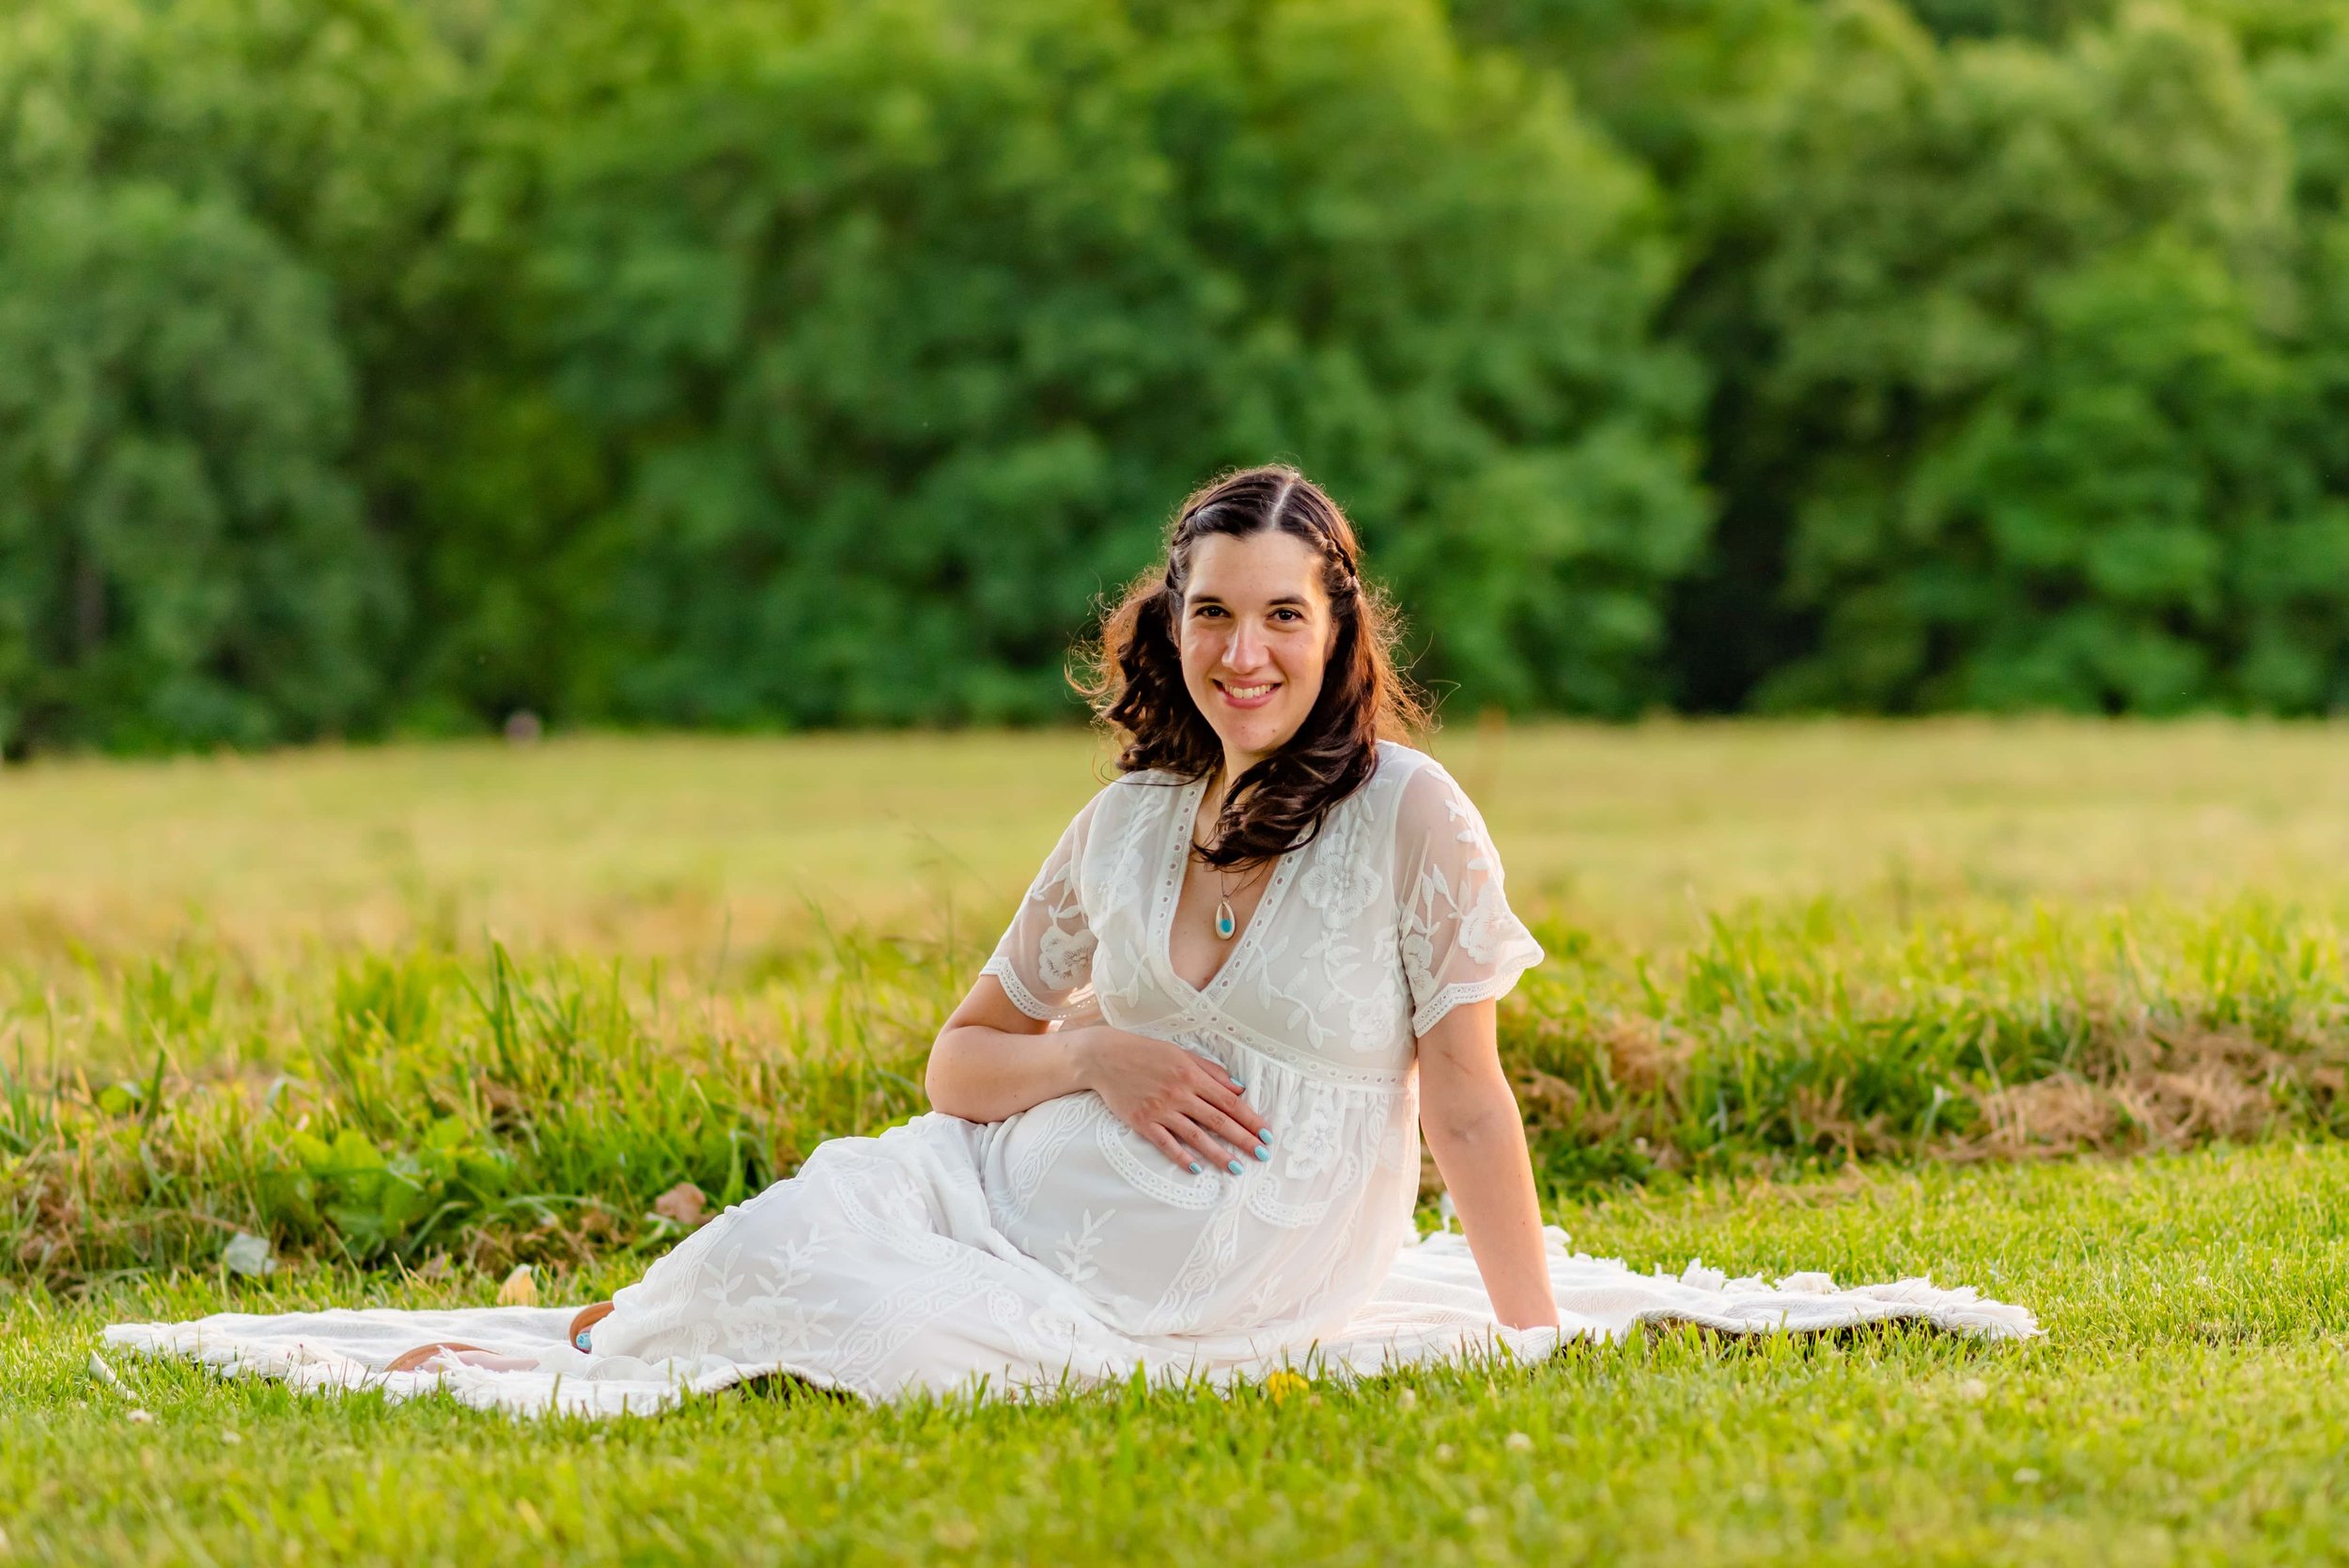 Maryland Maternity photoshoot of pregnant woman